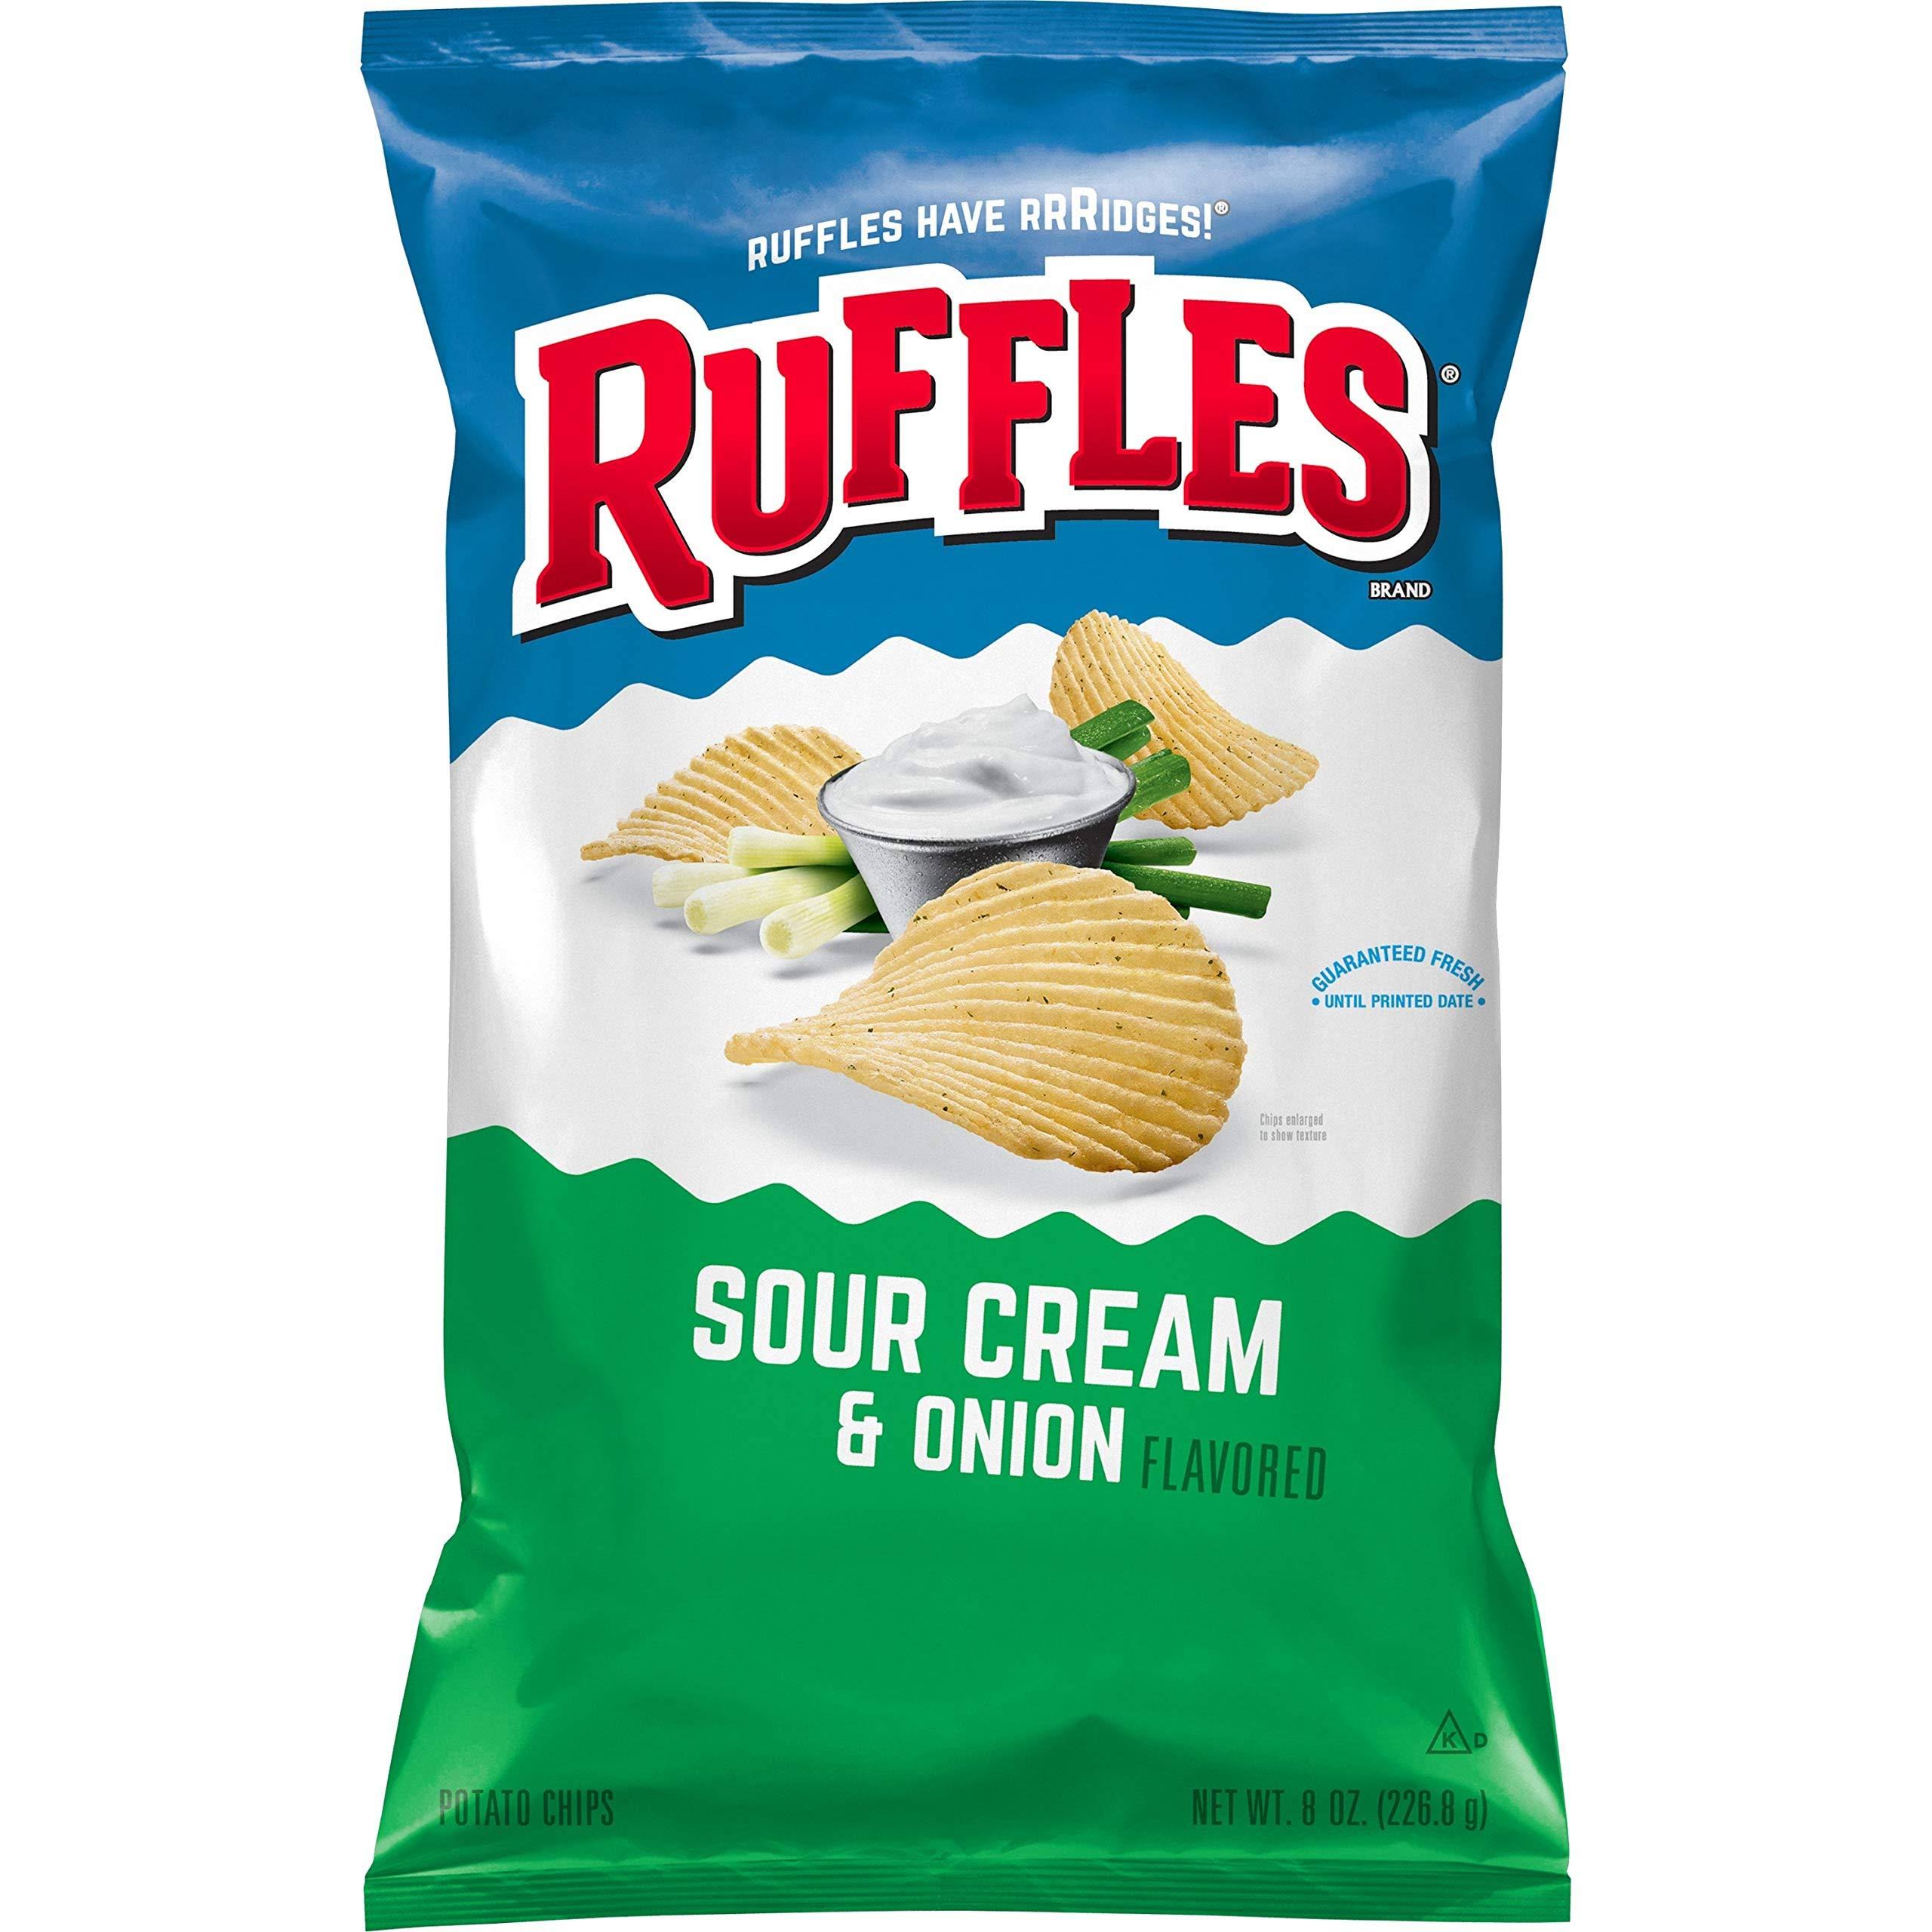 Ruffles Potato Chips, Sour Cream & Onion Flavored - 8 oz